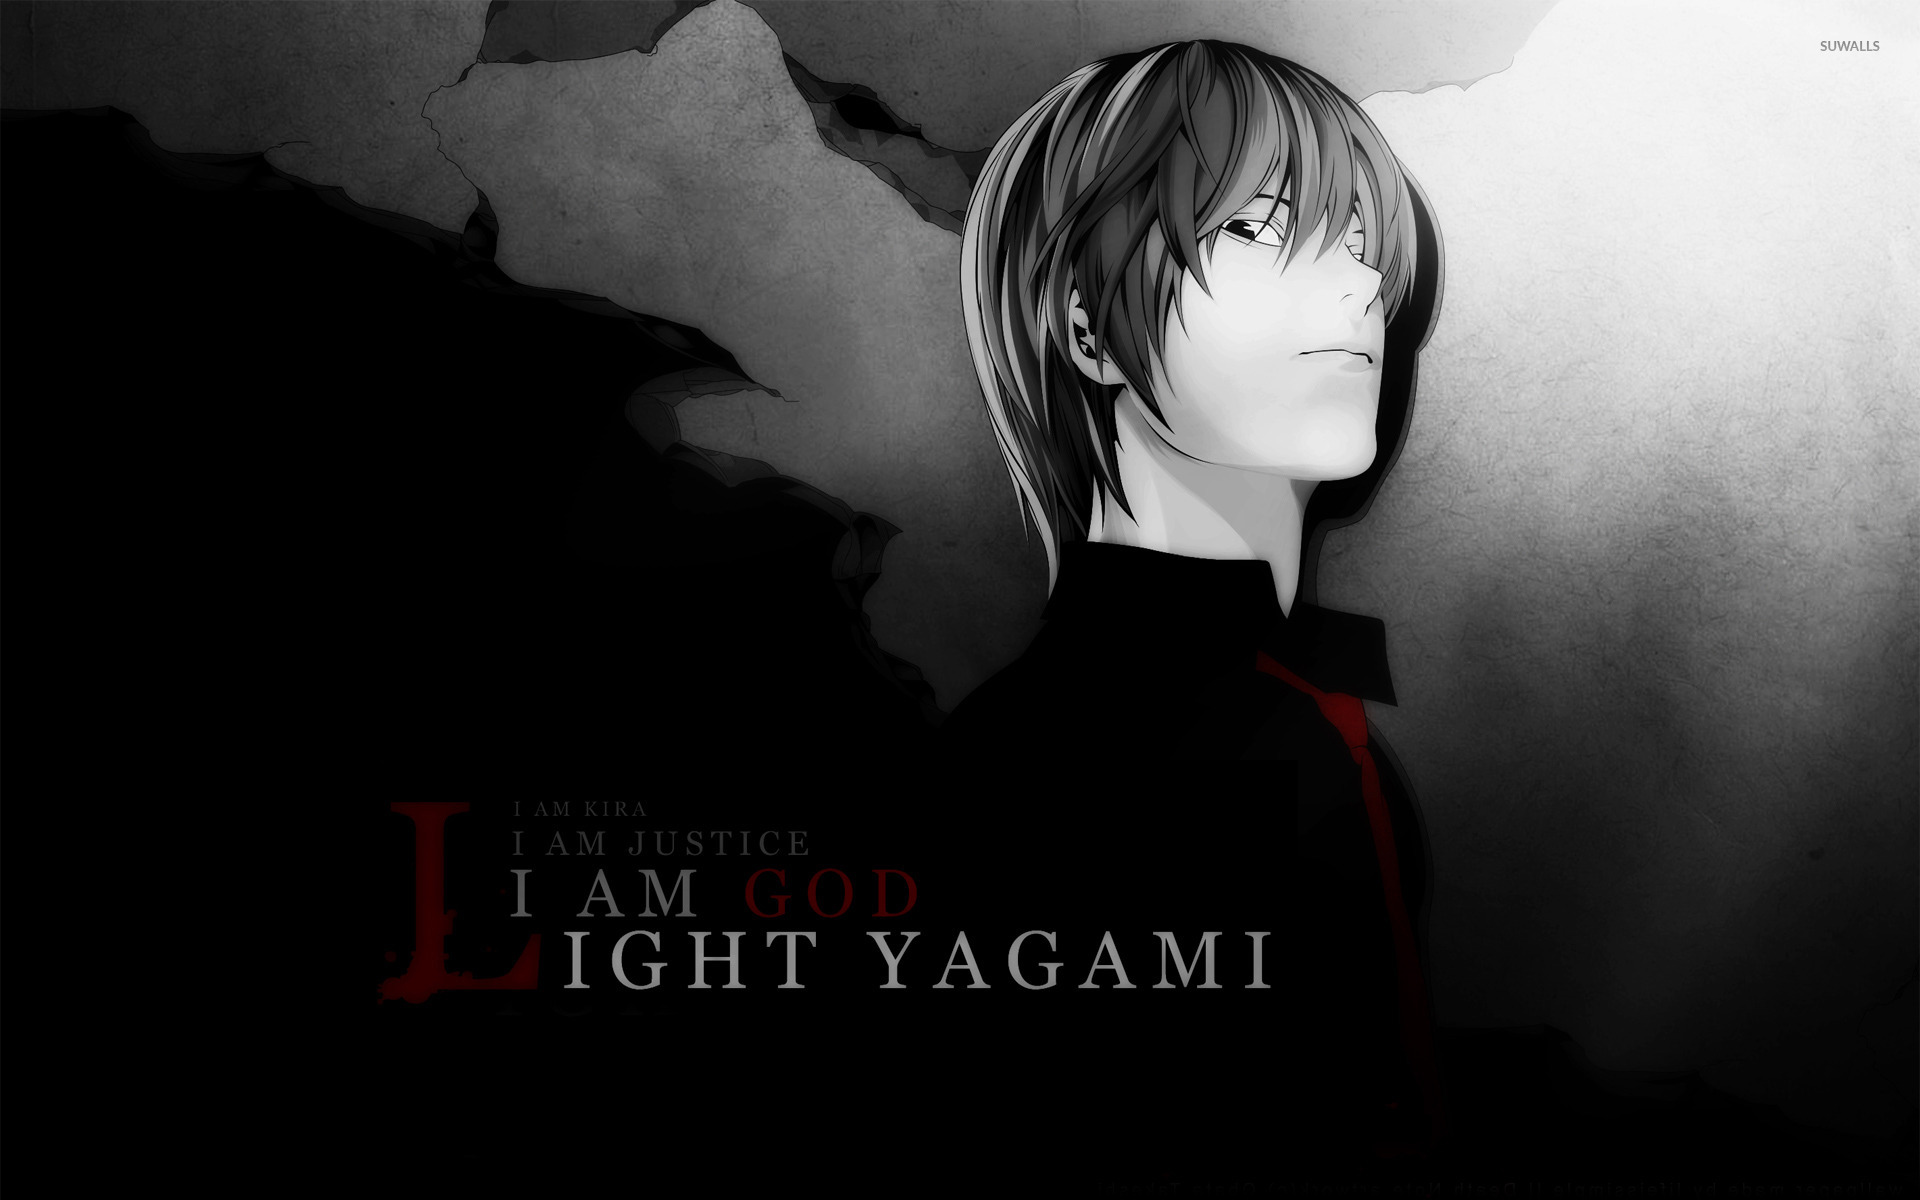 Light Yagami Imagens Para Tela De Bloqueio - HD Wallpaper 